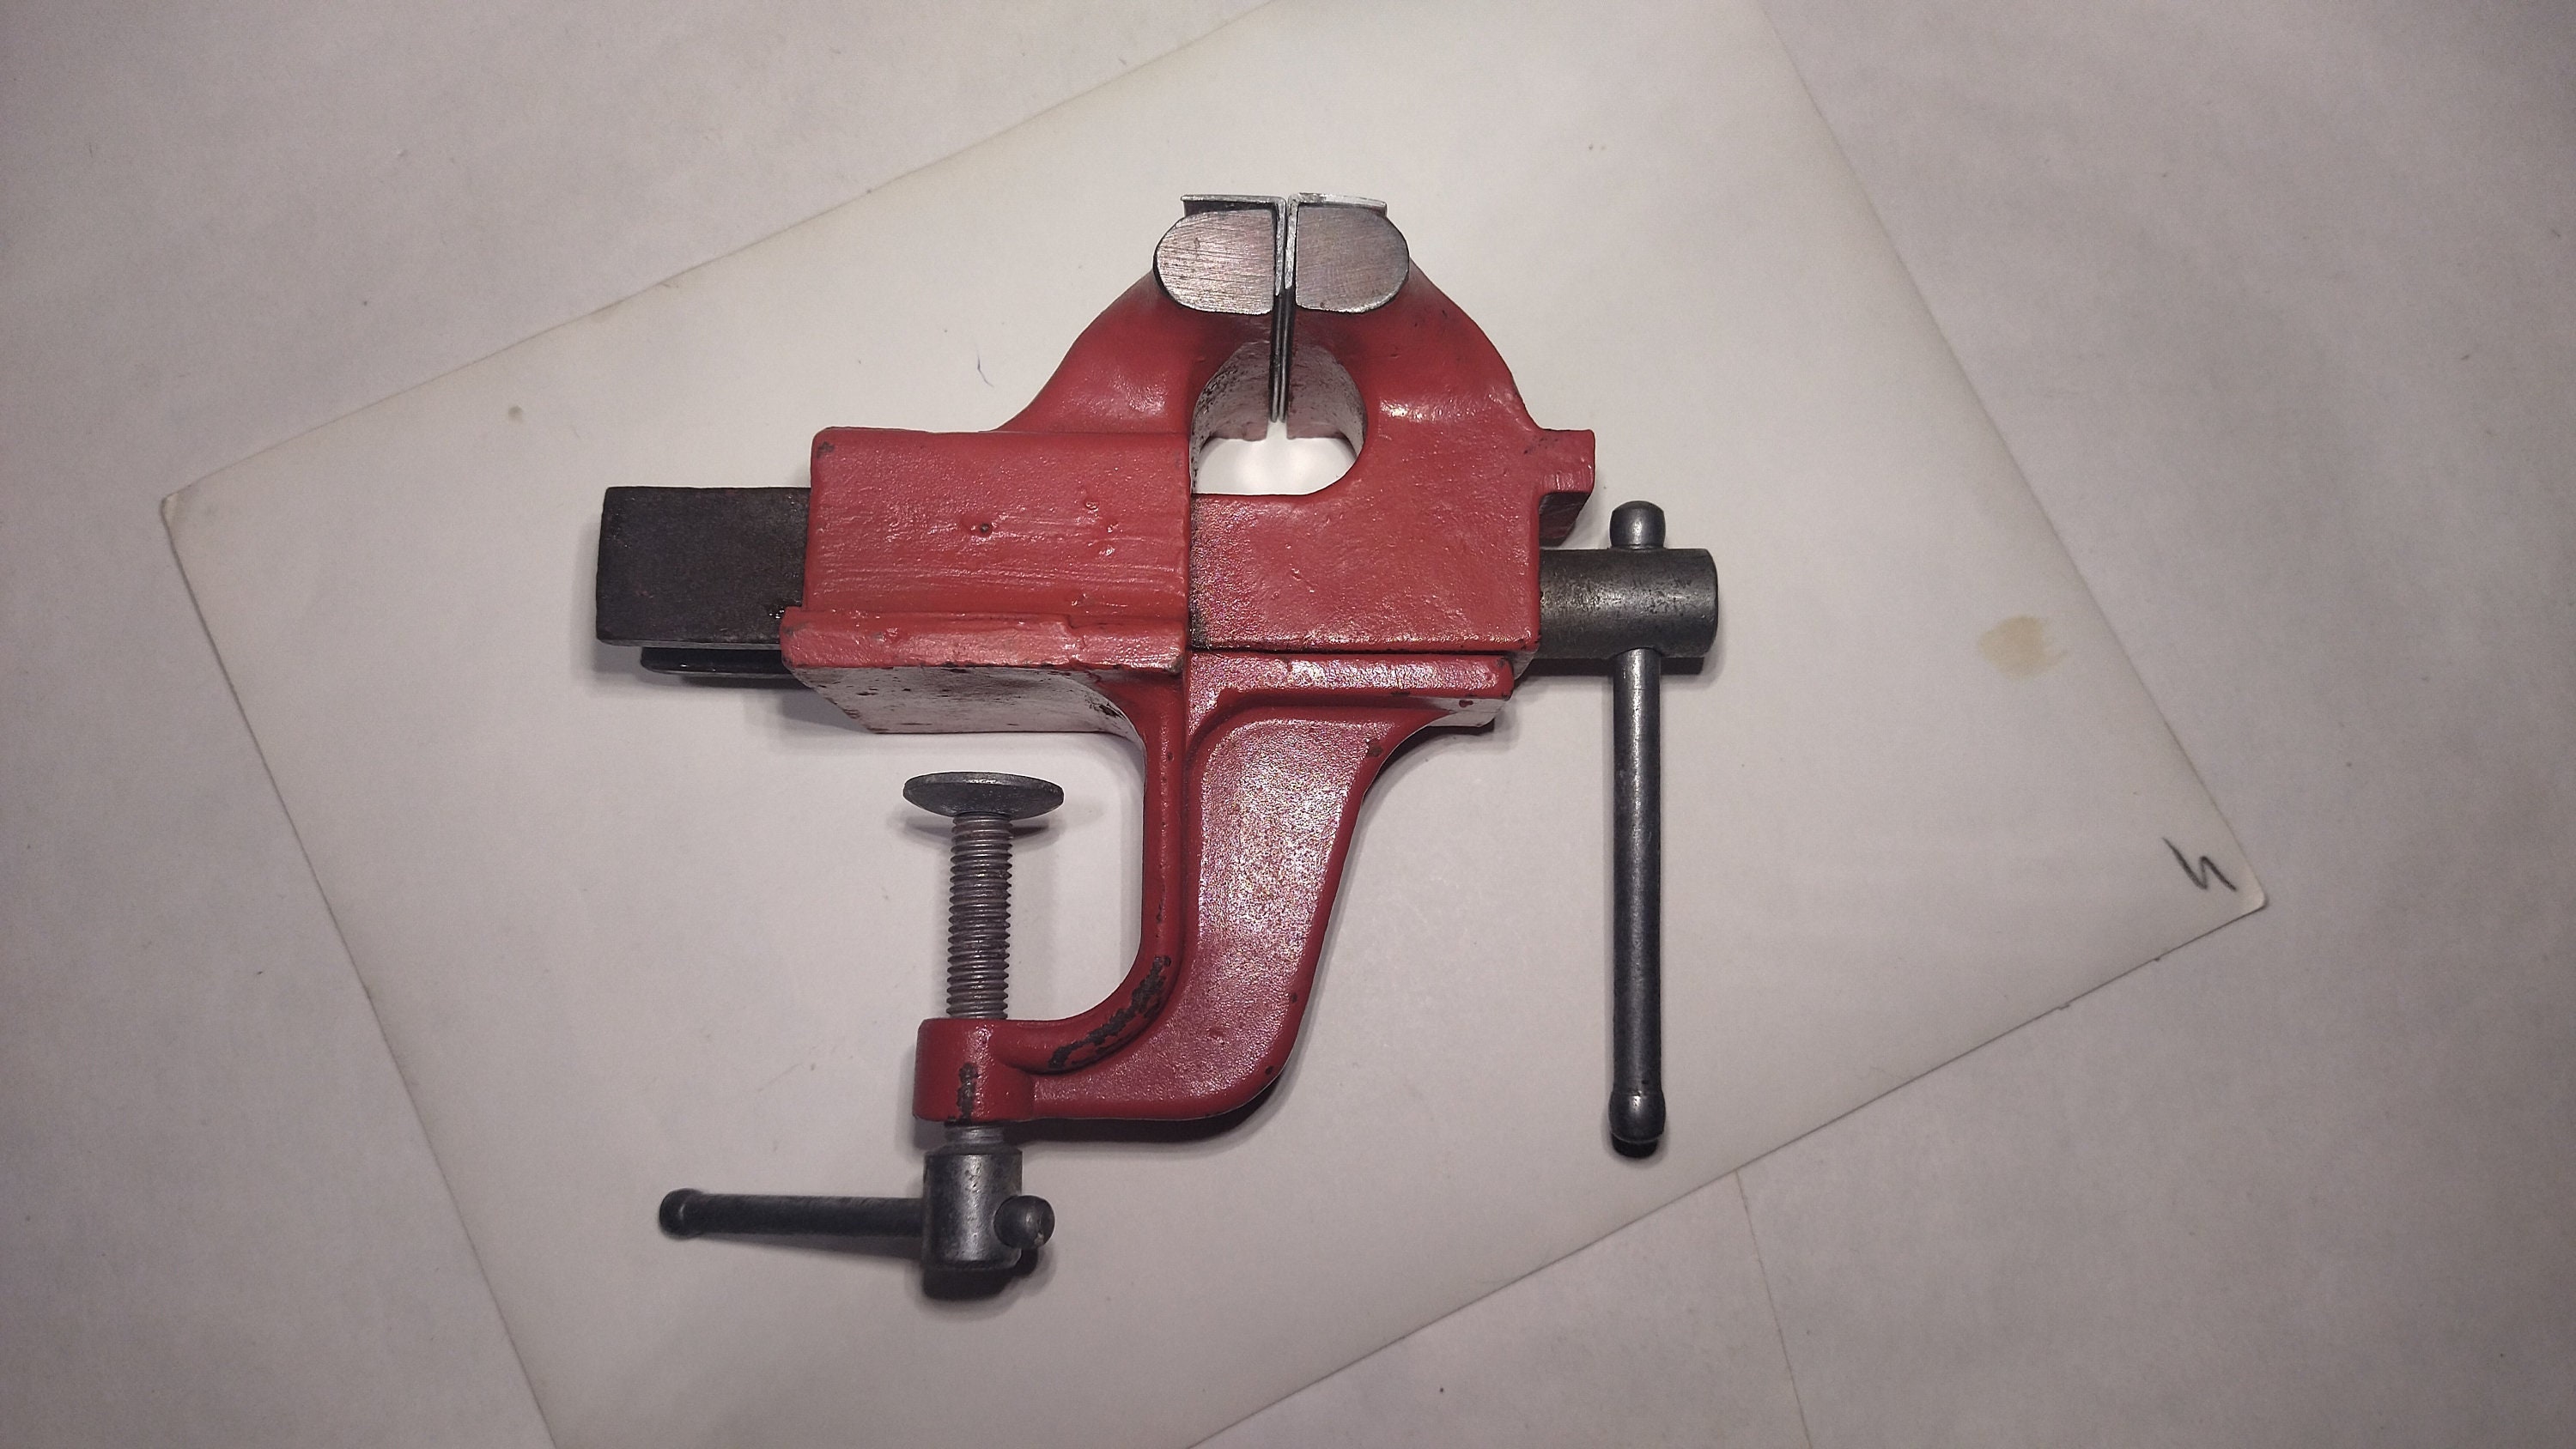 Steel Hand Drill Hand Spiral Pin Vise Drill DIY Jewelry Keychain